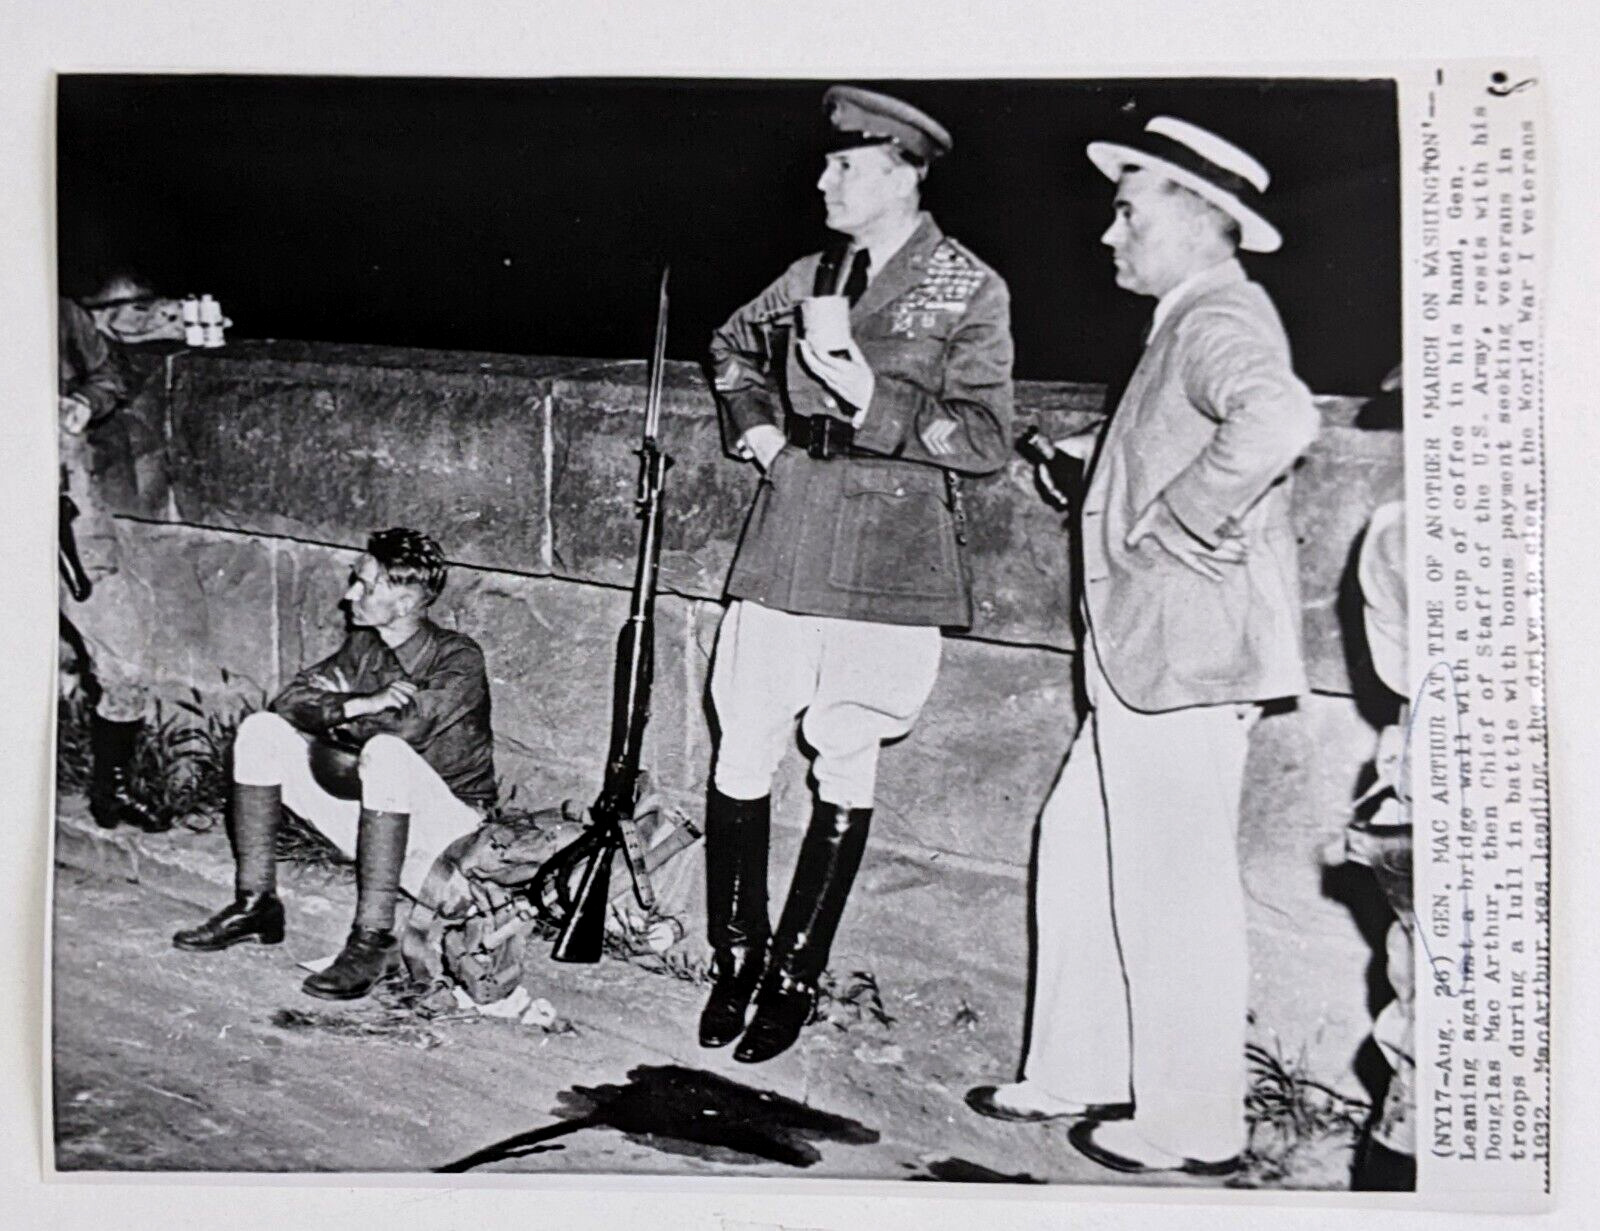 1963 REPRINT of 1932 Photo of General MacArthur Helping WWI Veterans Vintage